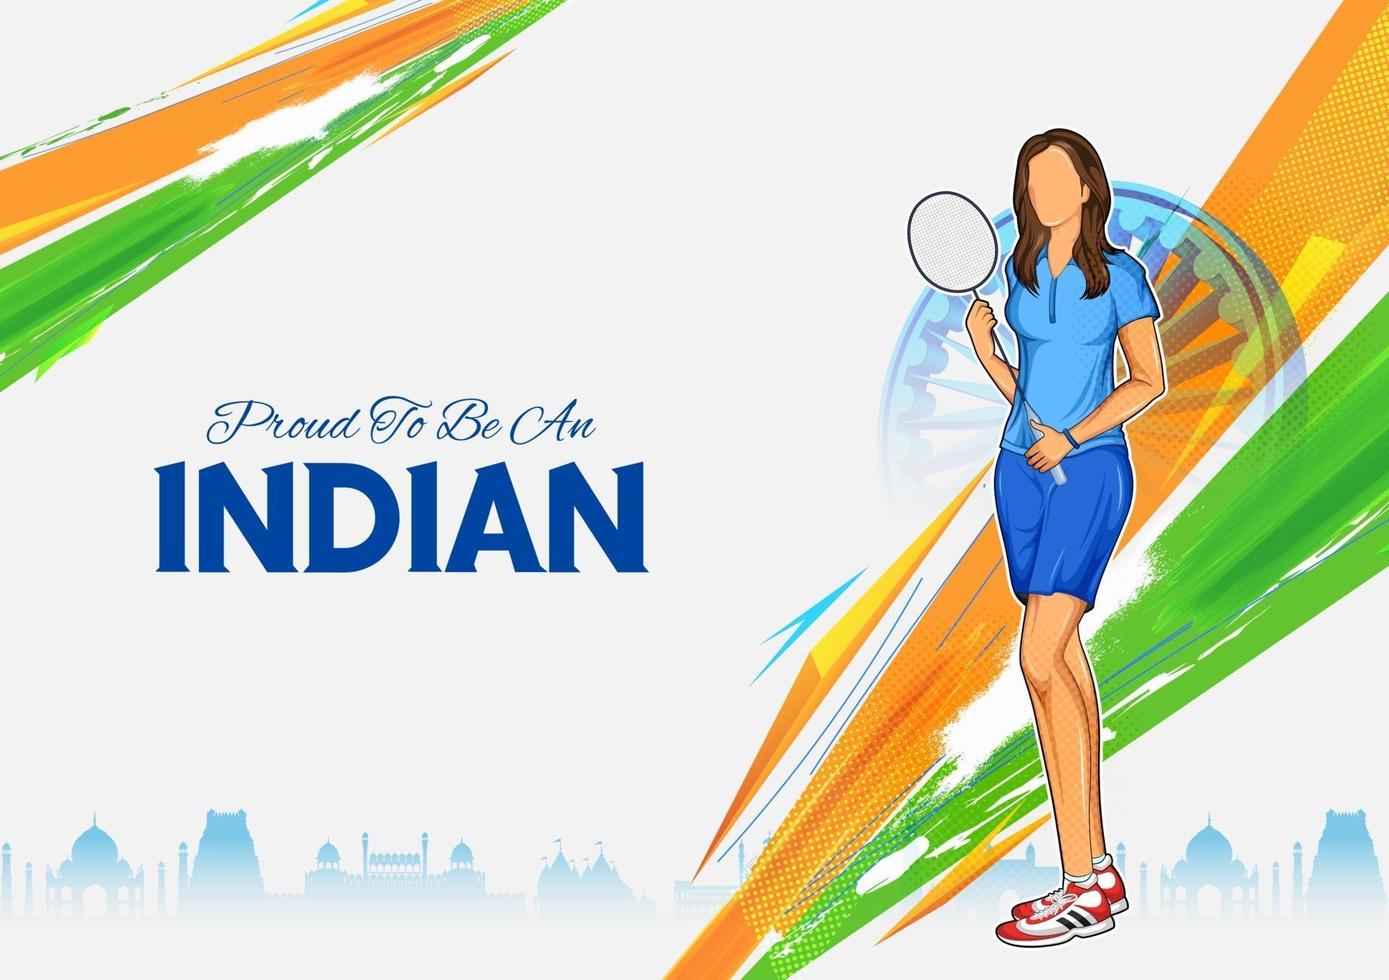 atleta indiana de badminton na categoria feminina no campeonato vetor